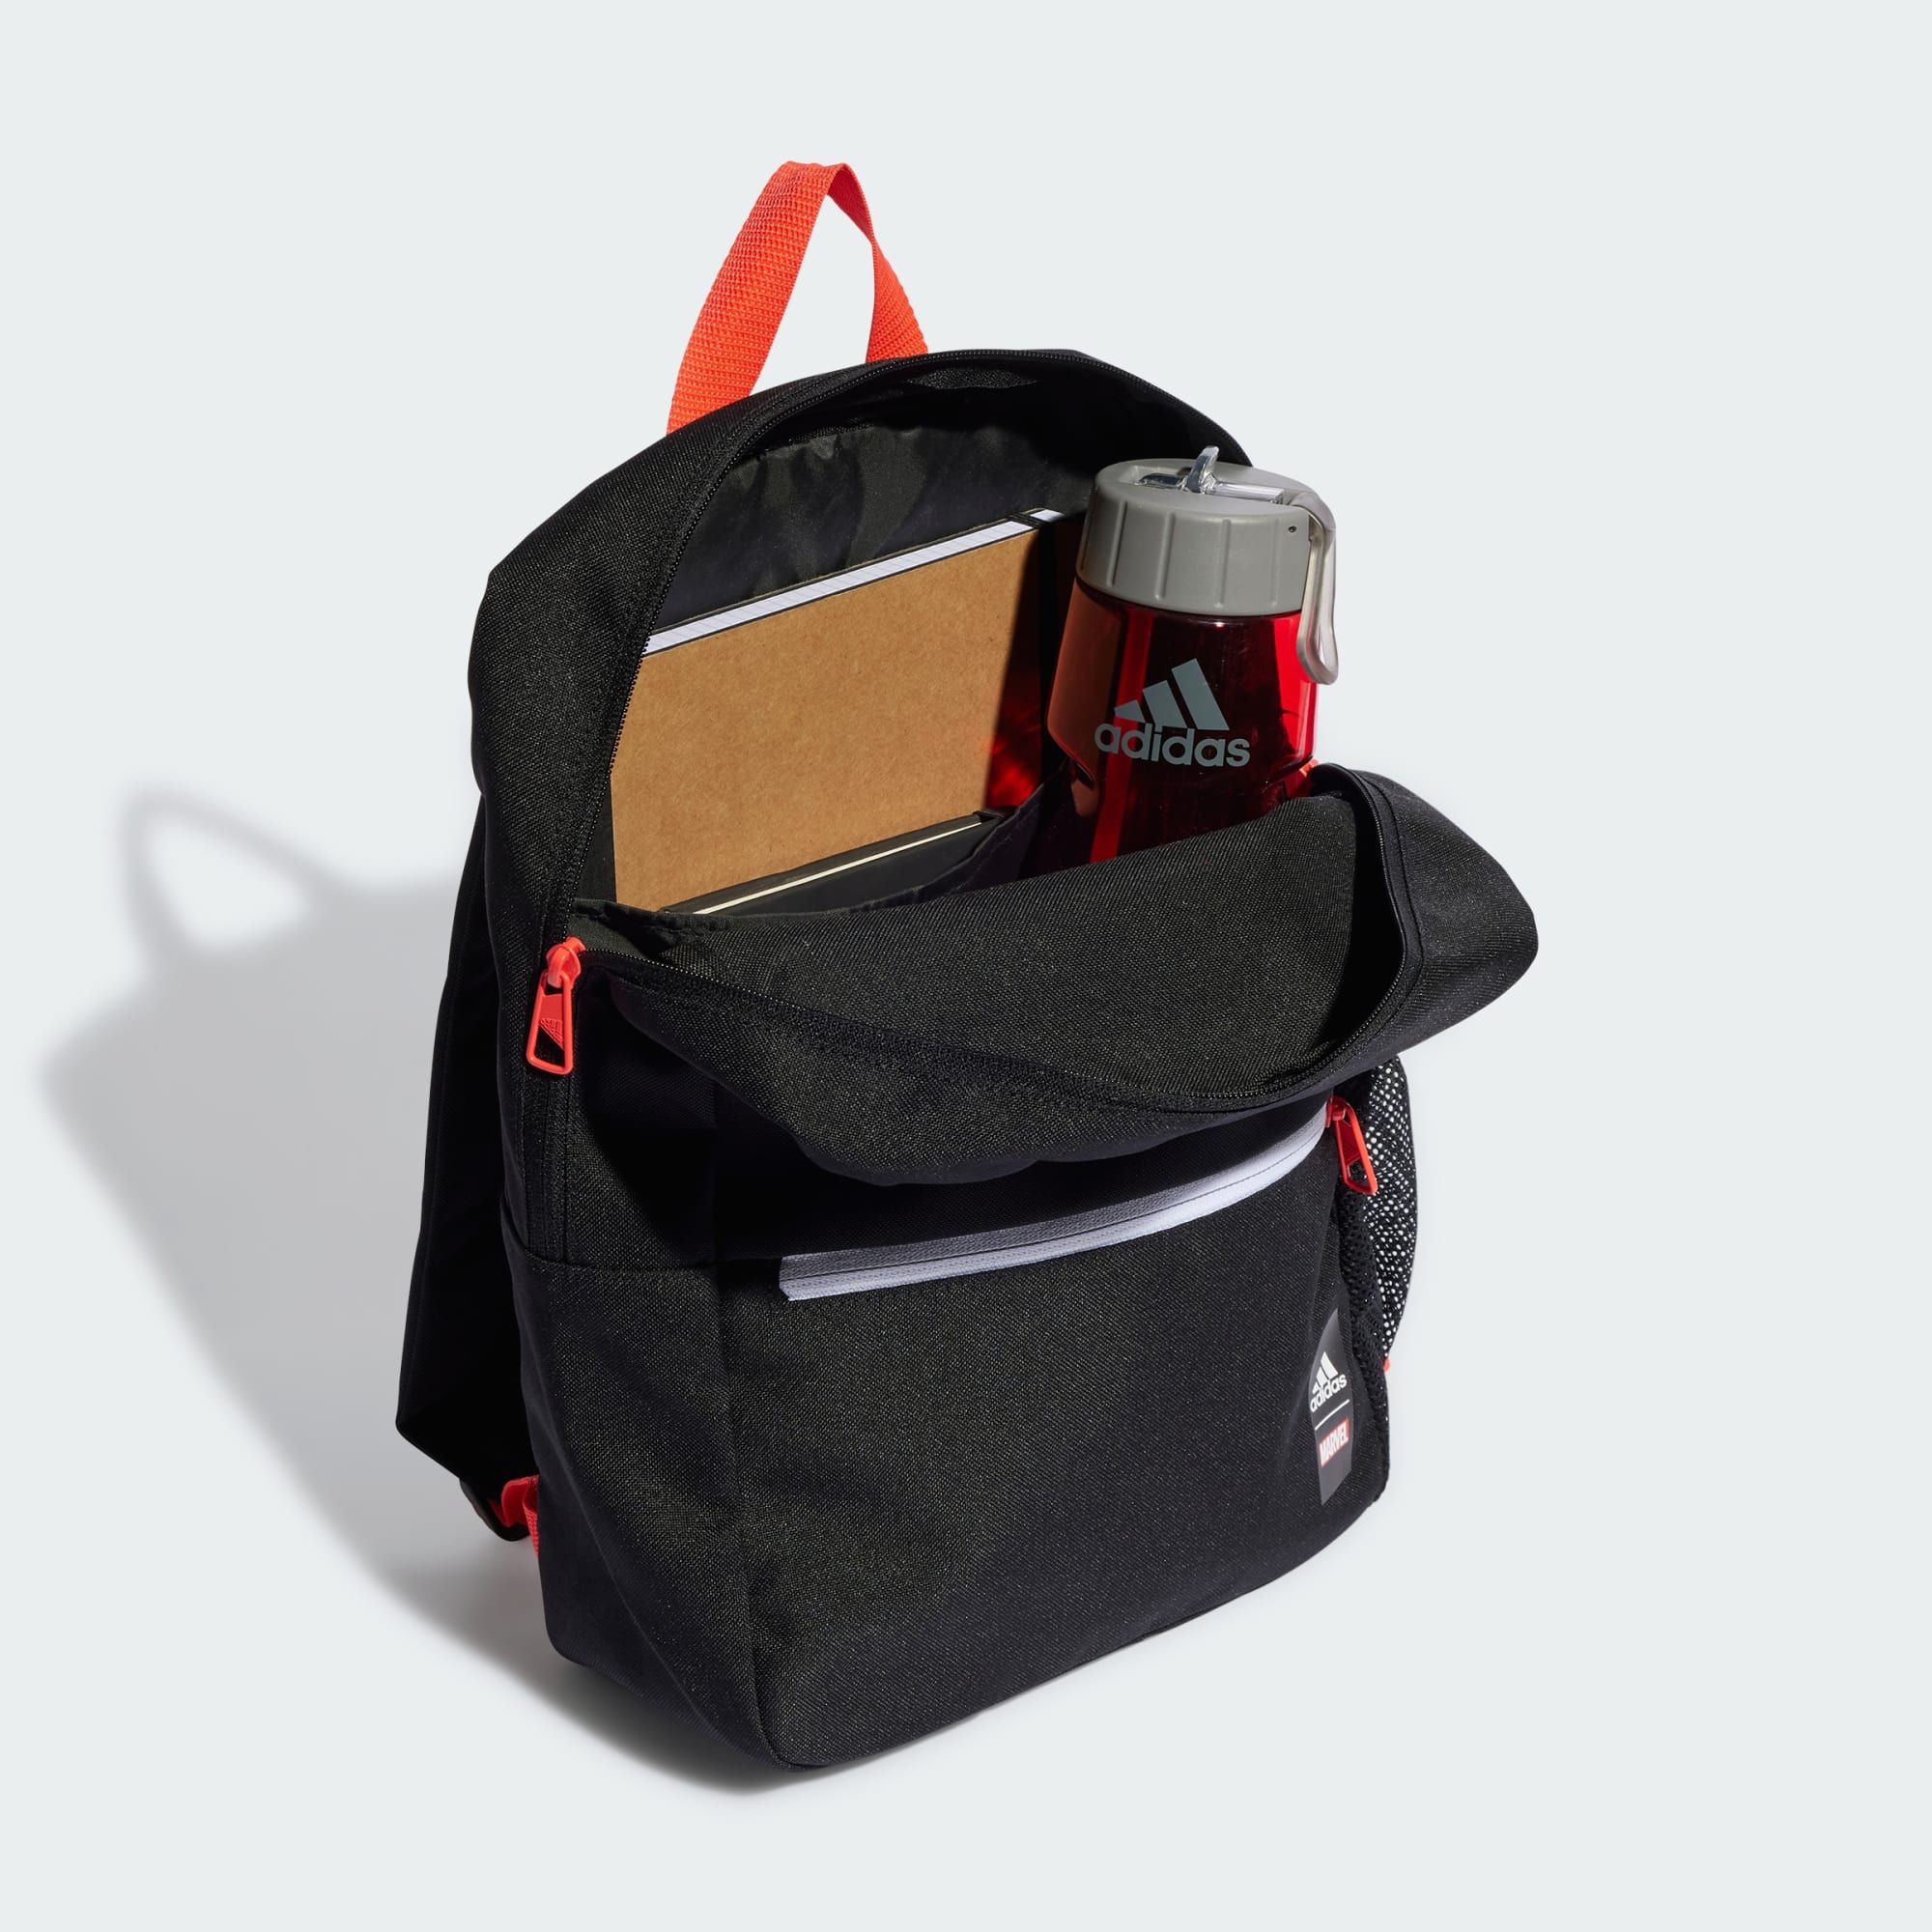 Best School Bags for Boys – Snooplay